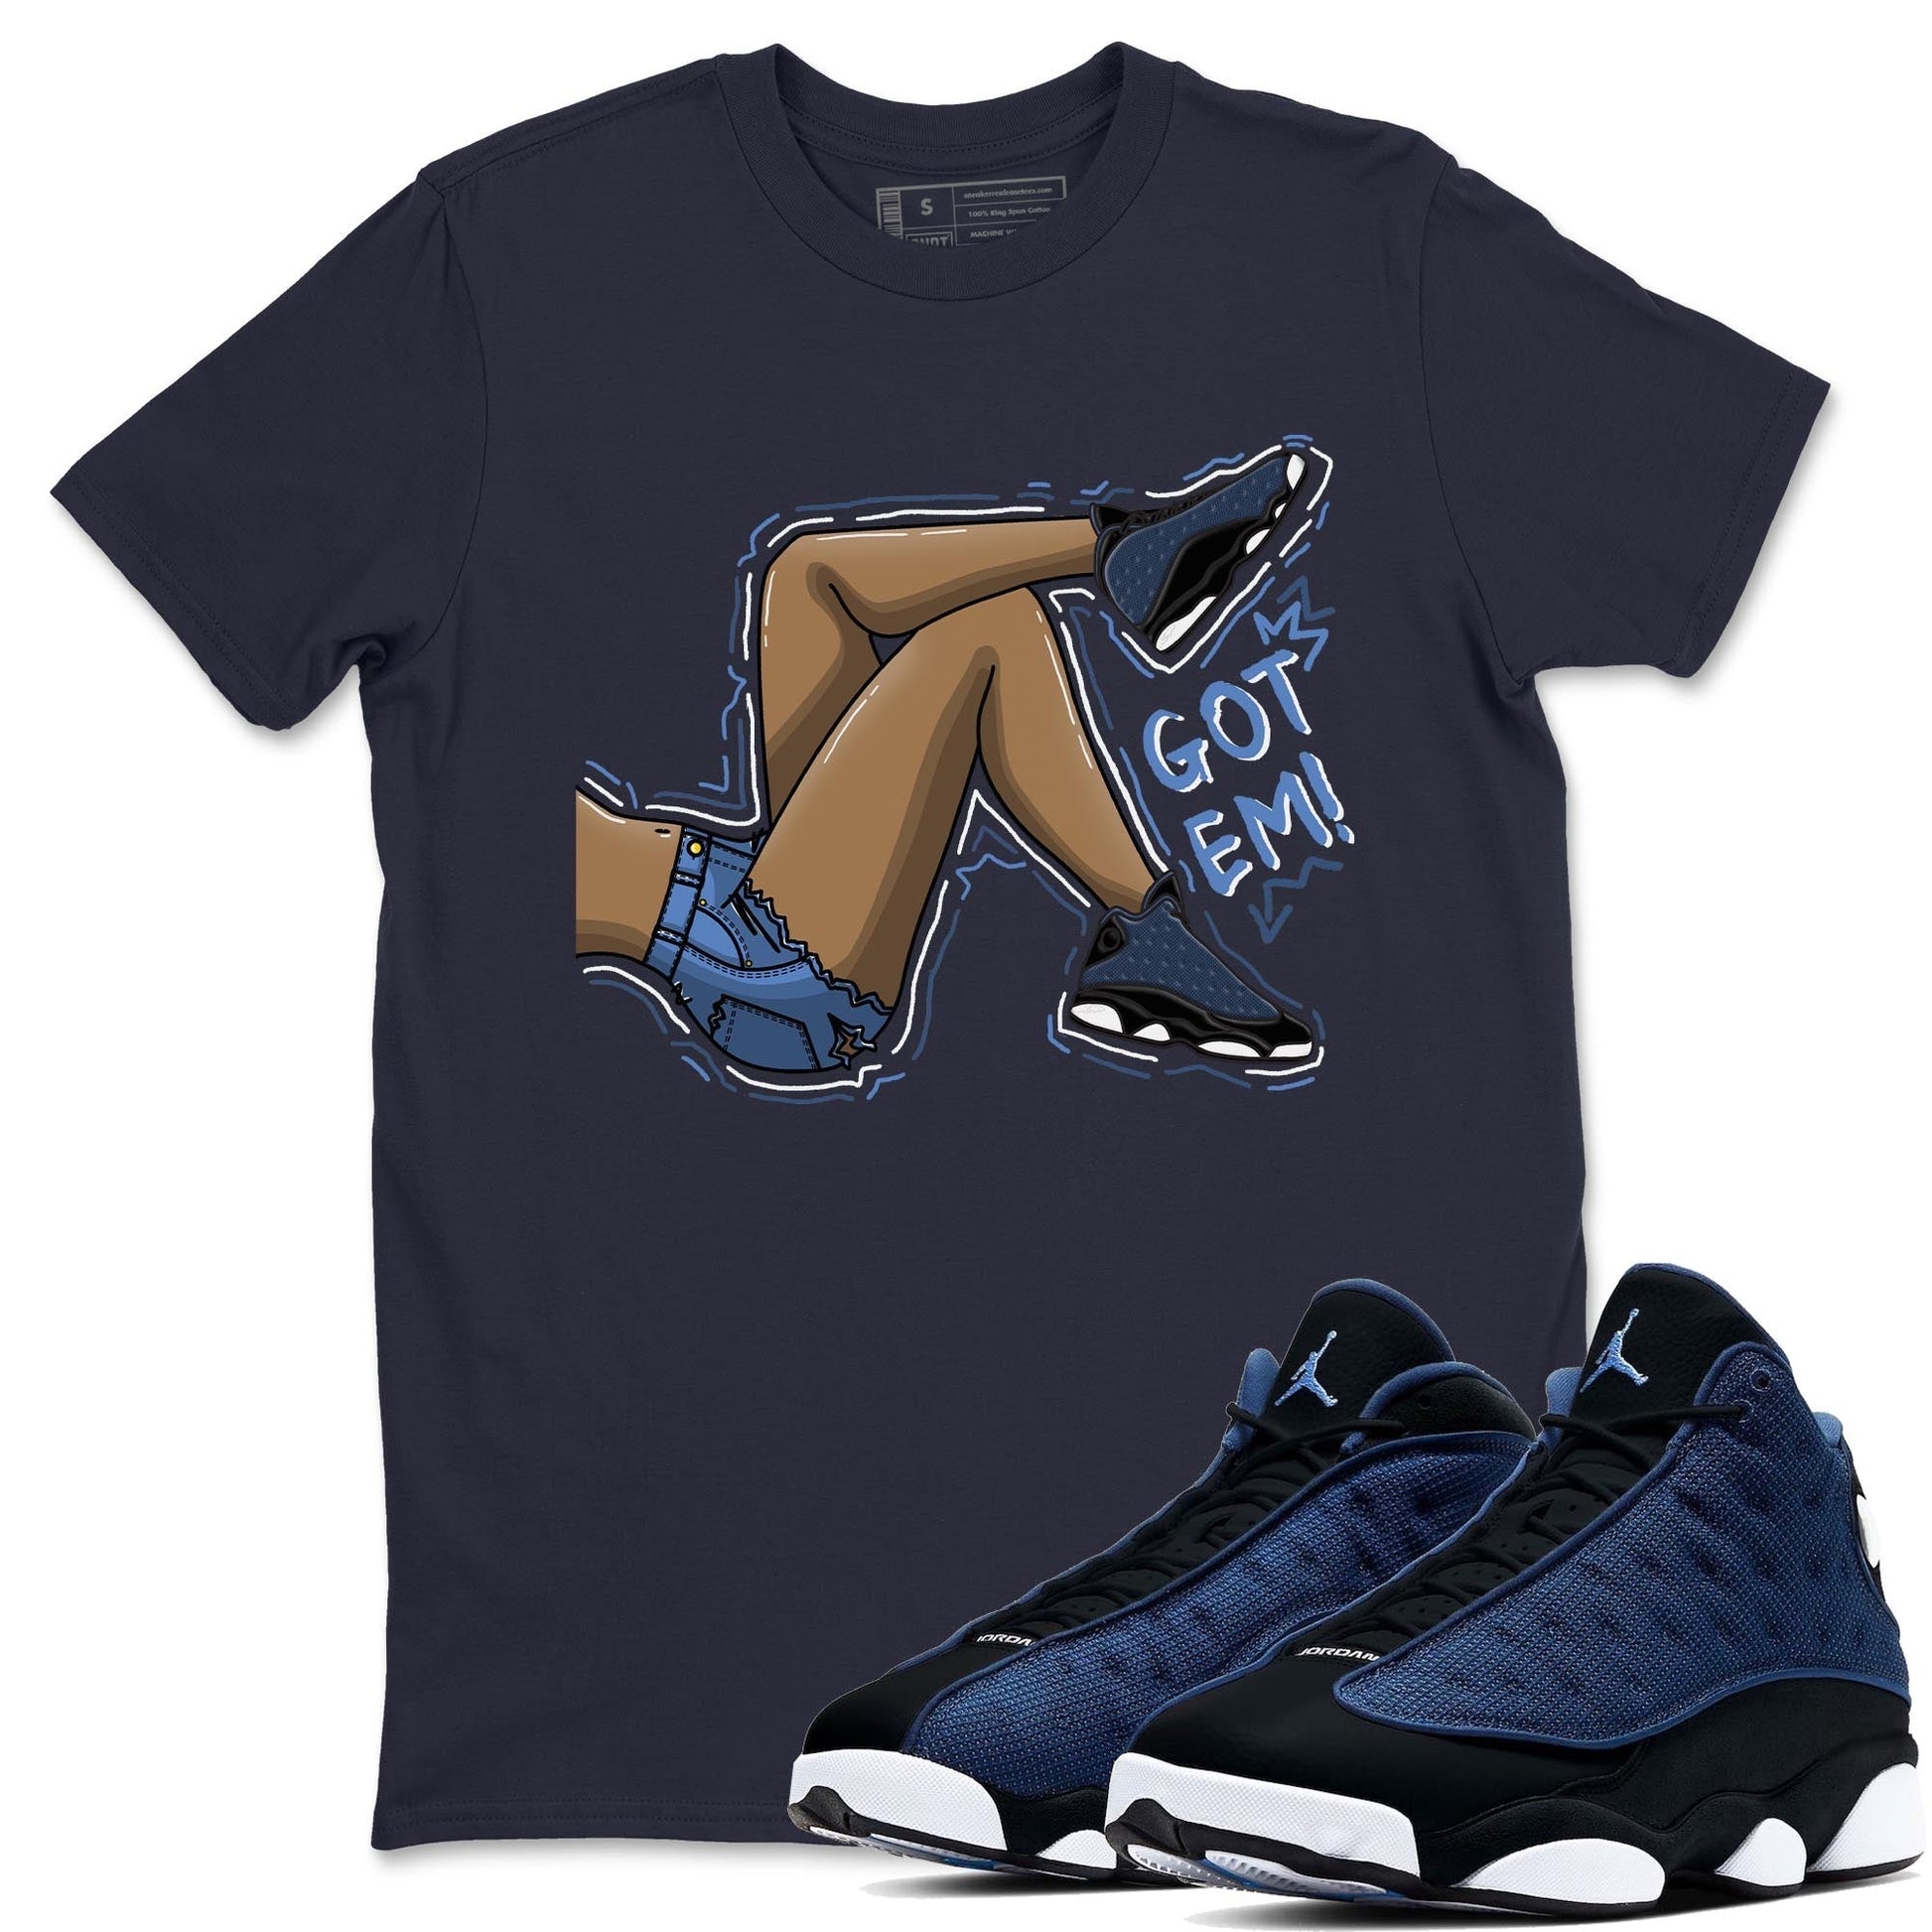 Jordan 13 Brave Blue Sneaker Match Tees Got Em Legs Sneaker Tees Jordan 13 Brave Blue Sneaker Release Tees Unisex Shirts